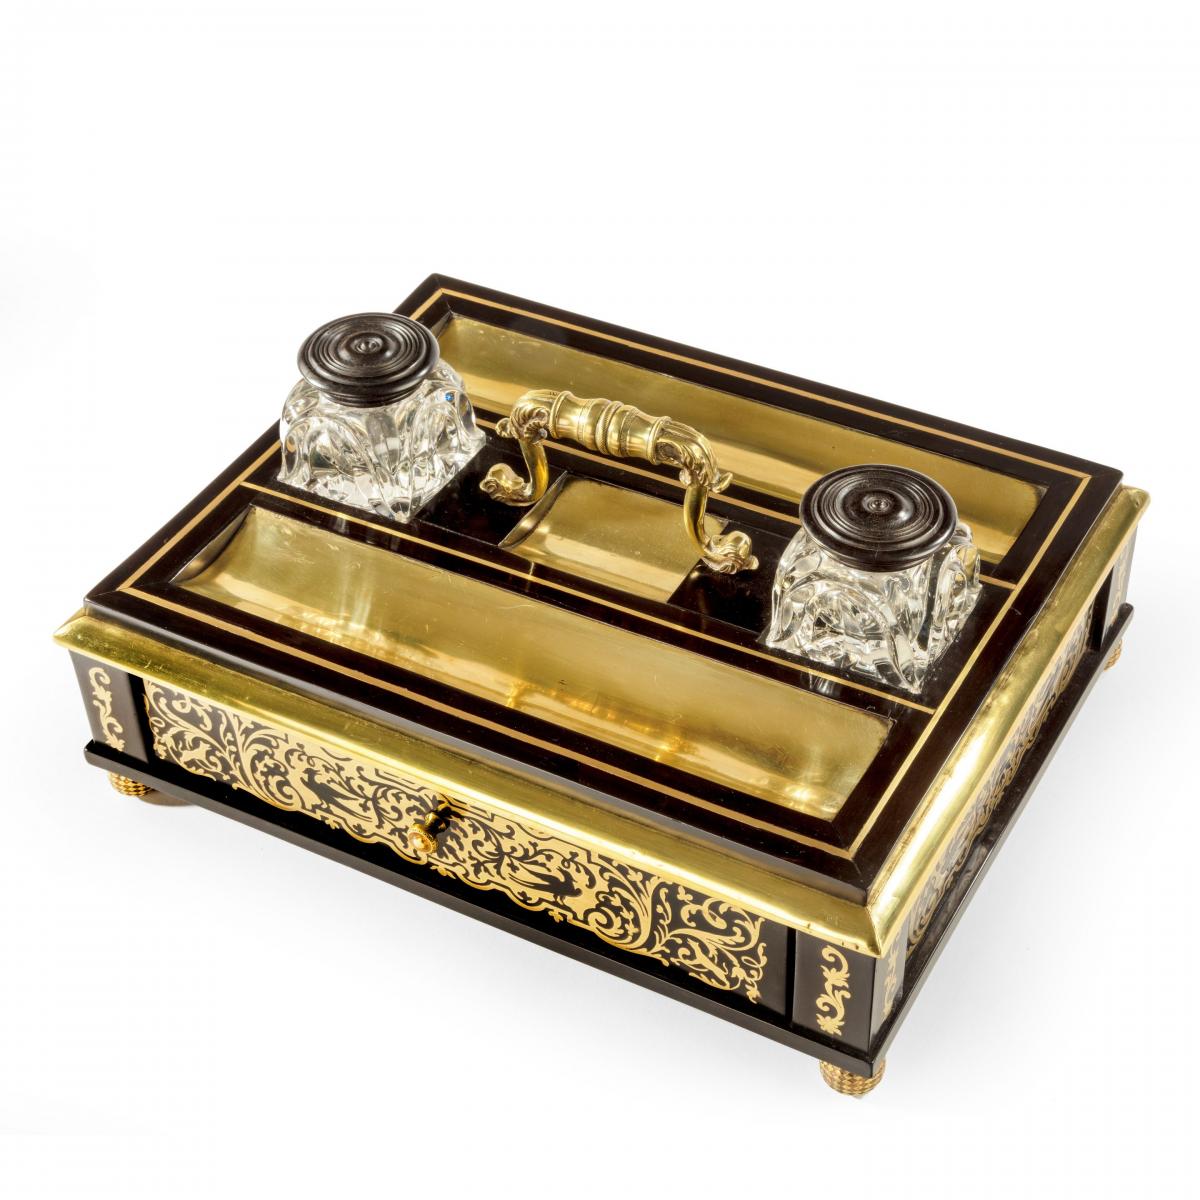 A Regency brass-inlaid ebony desk compendium